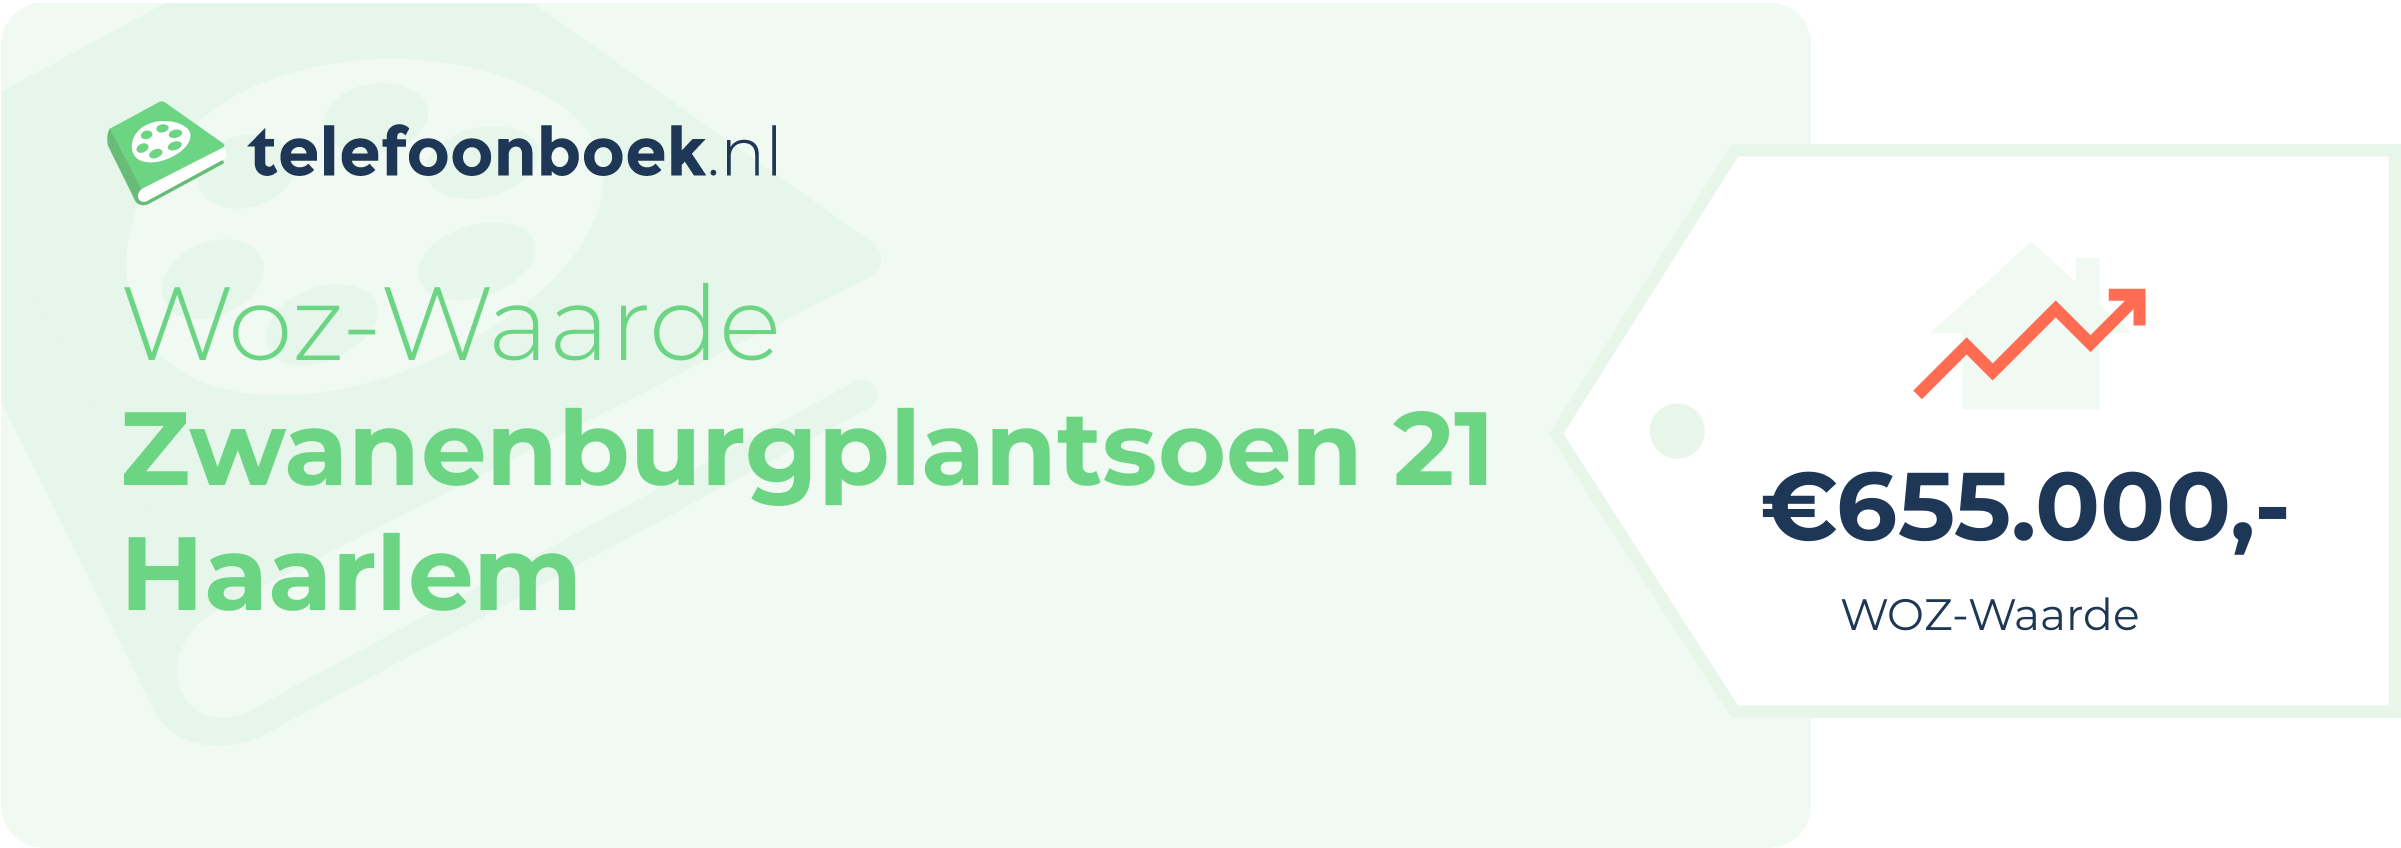 WOZ-waarde Zwanenburgplantsoen 21 Haarlem